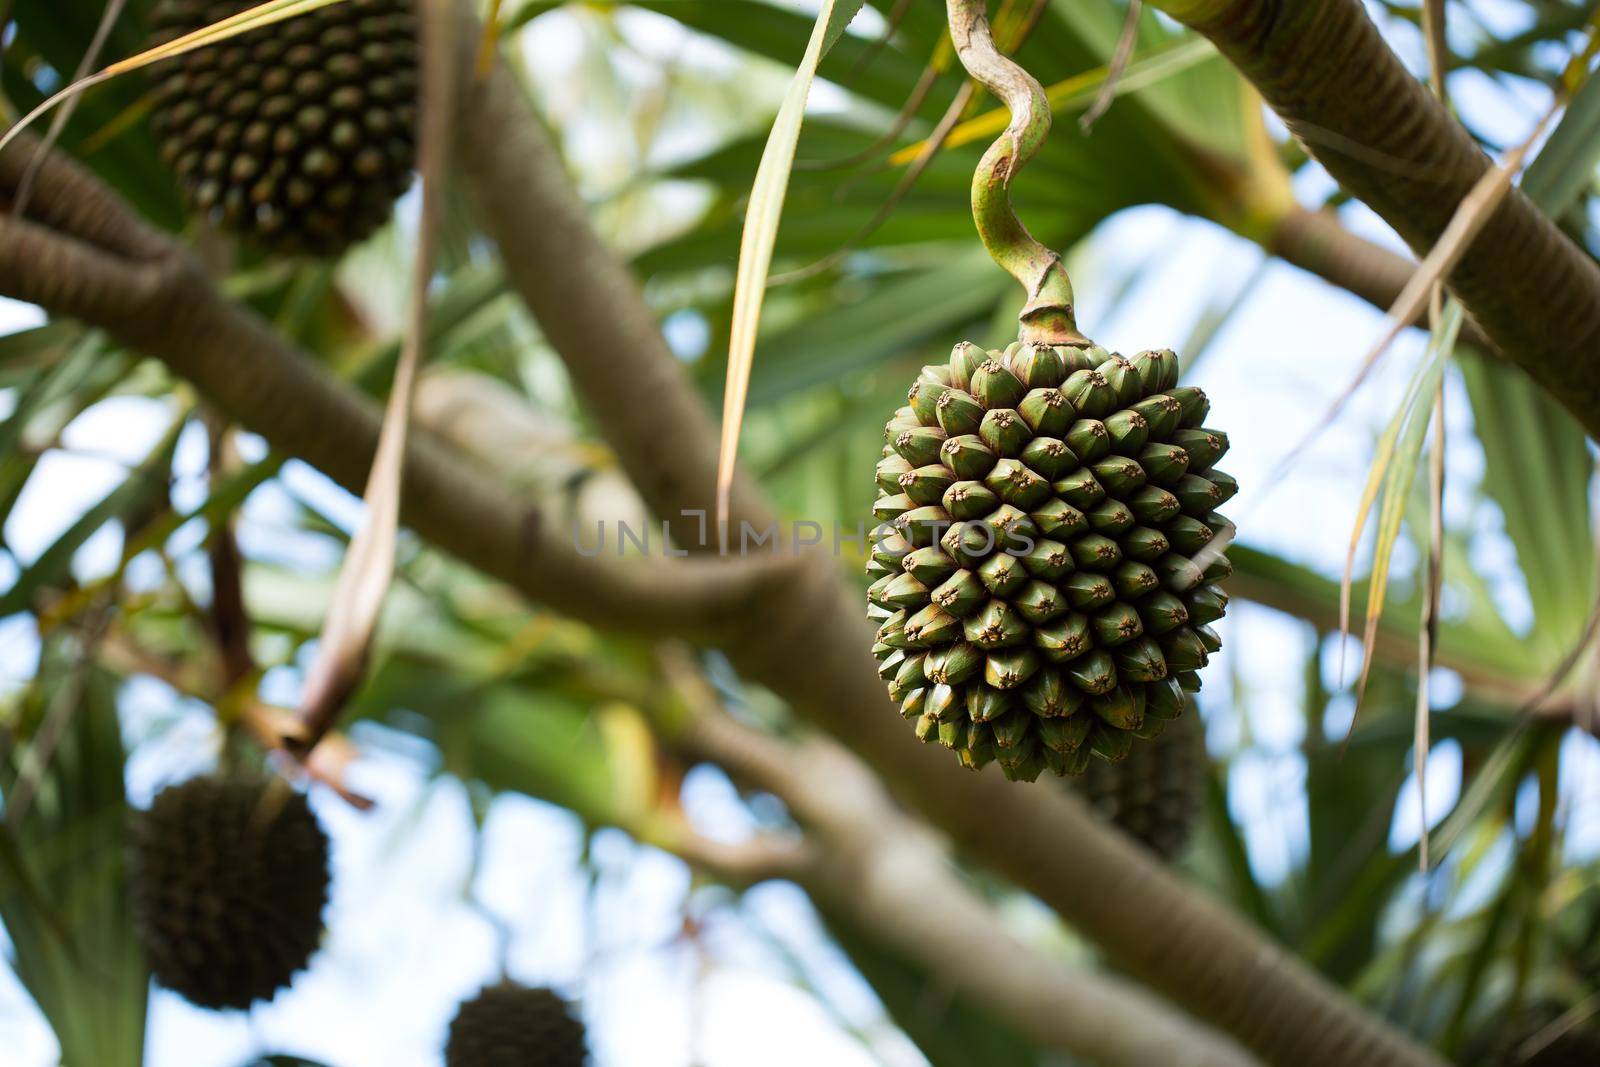 Pandanus fruits grow on a tree on the island.